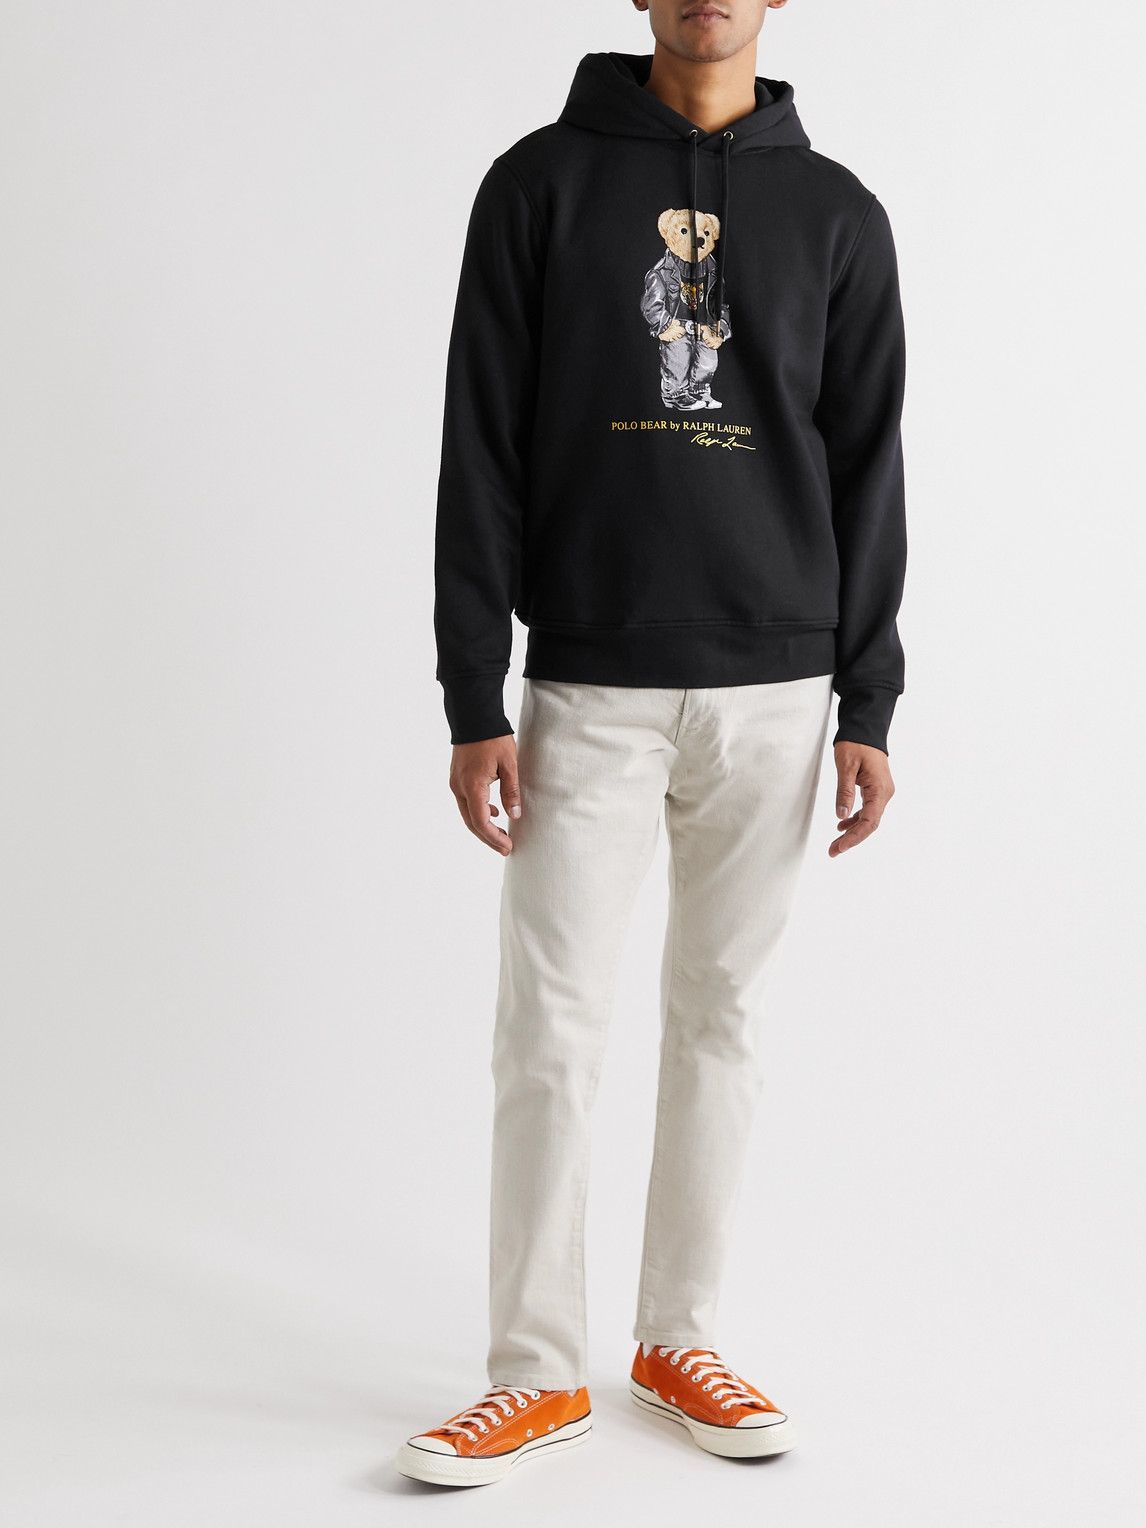 Polo Ralph Lauren - Logo-Print Cotton-Blend Jersey Hoodie - Black